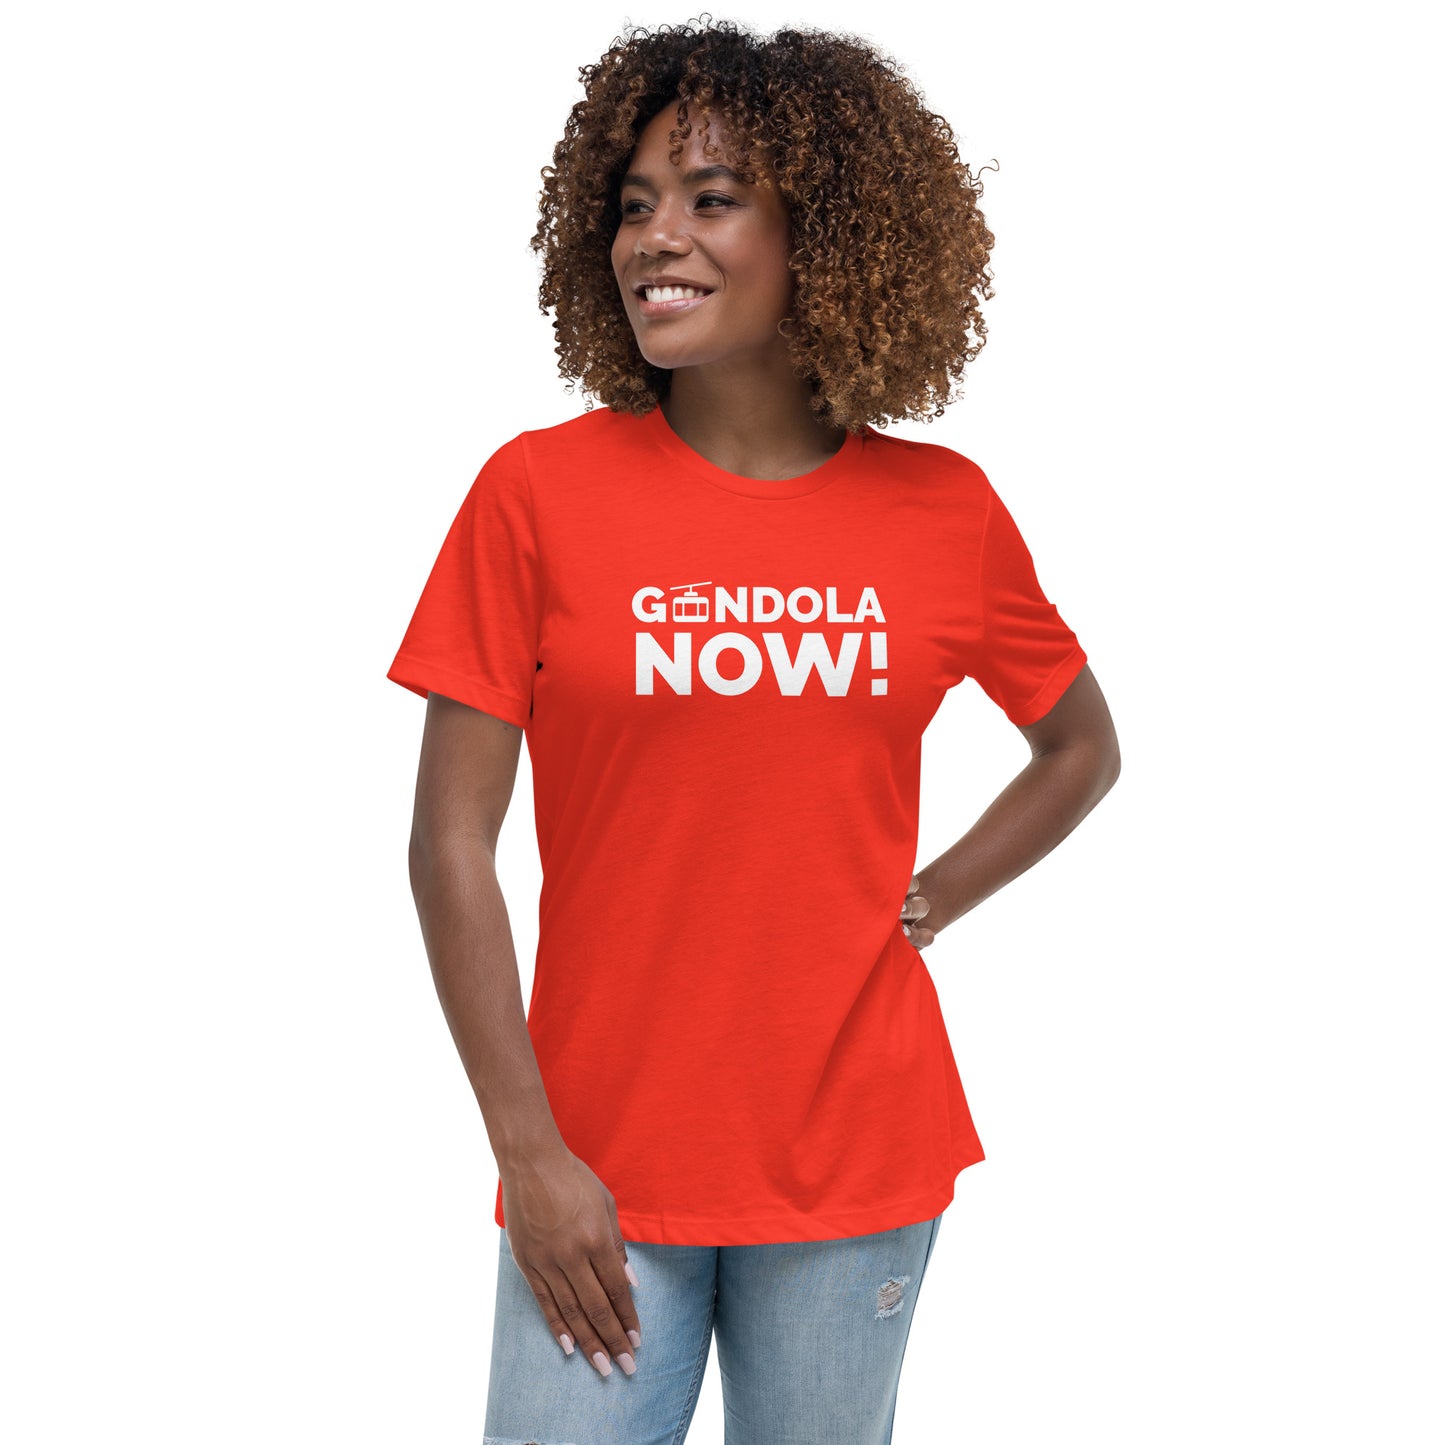 Gondola Now t-shirt (women)